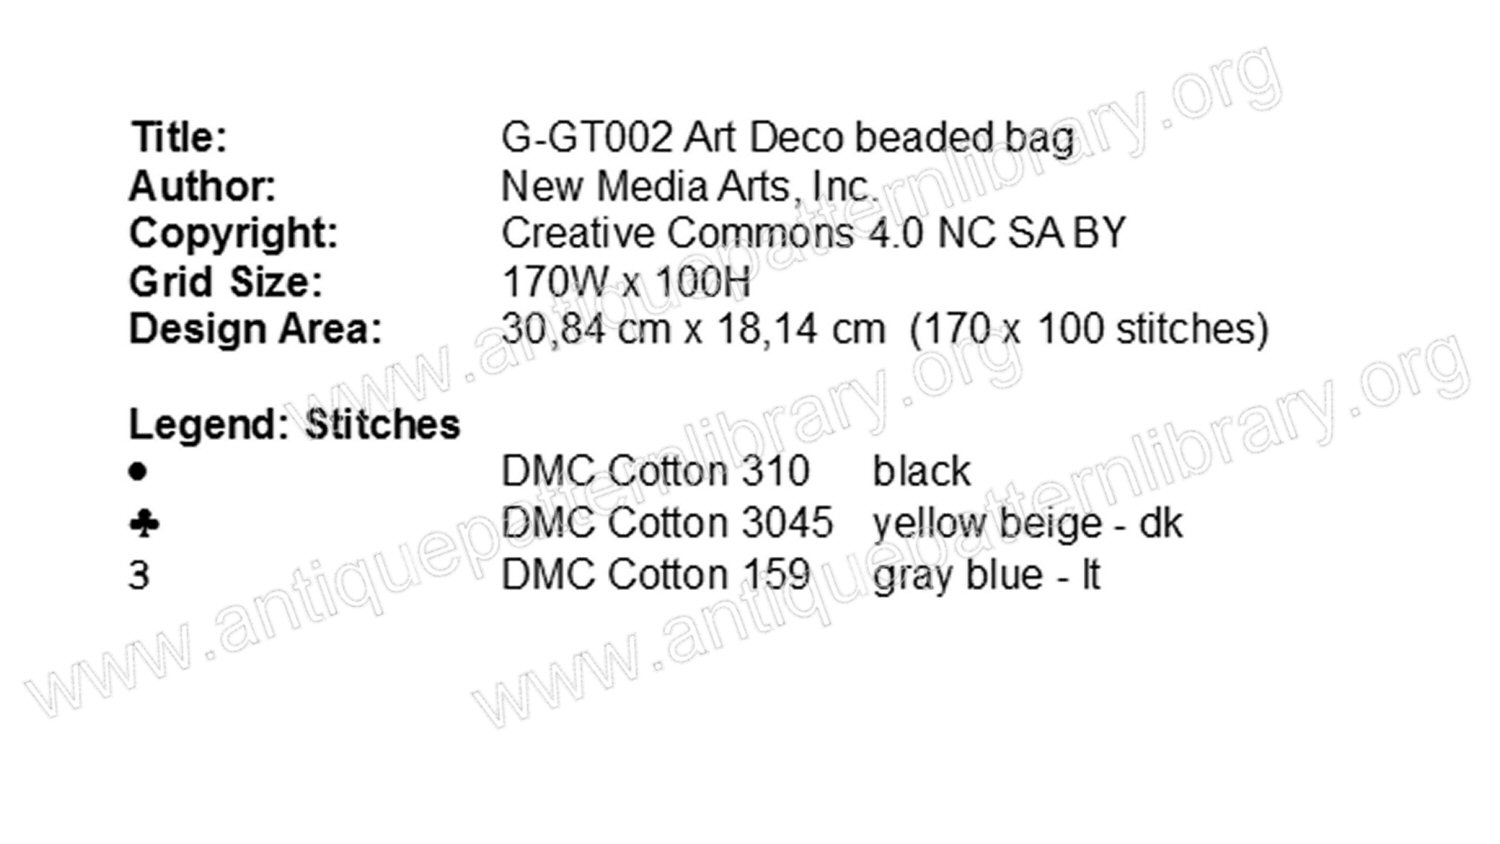 G-GT002 Art-Deco-Bag-France-Mesh-Beads-Purse-Gold-Silver-Black-Geometrical-Fringe-Chain-121877276145